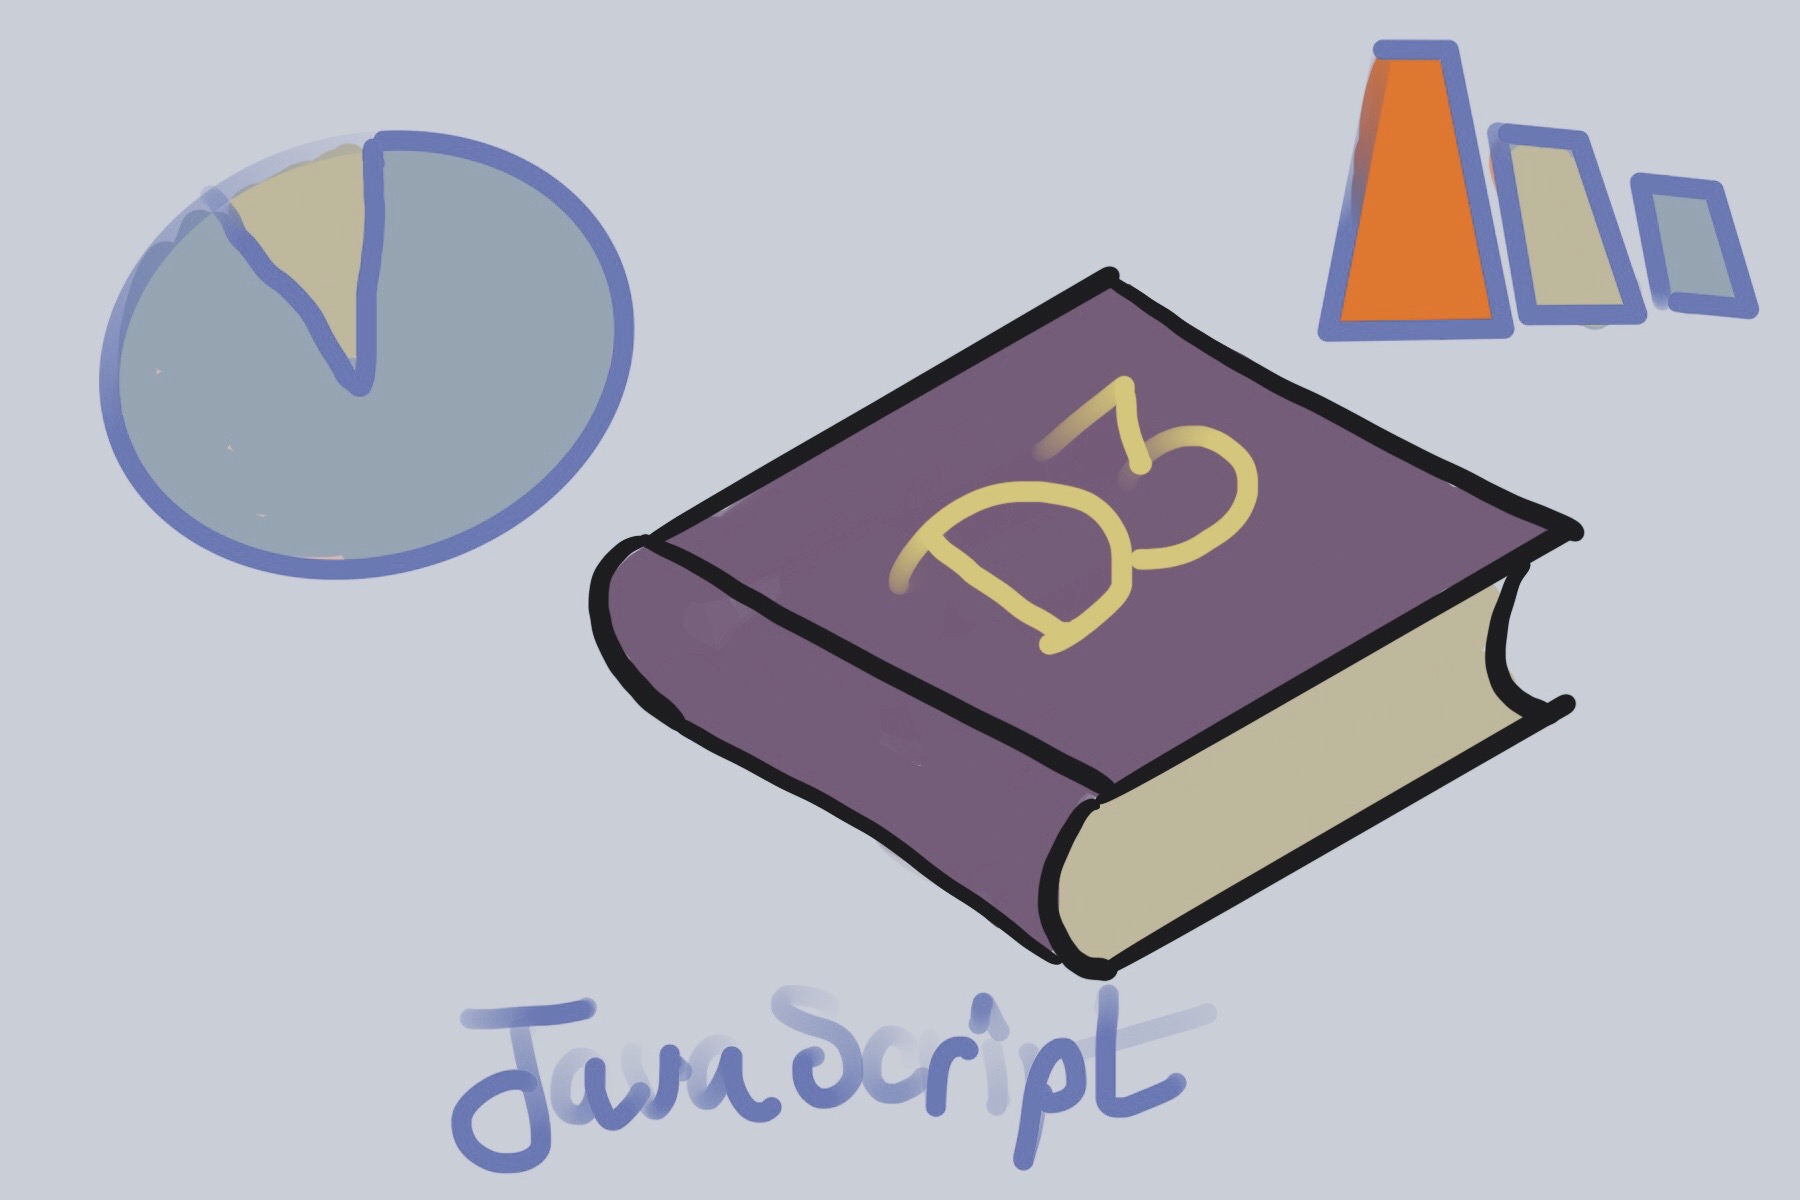 Practical D3.js by Tarek Amr